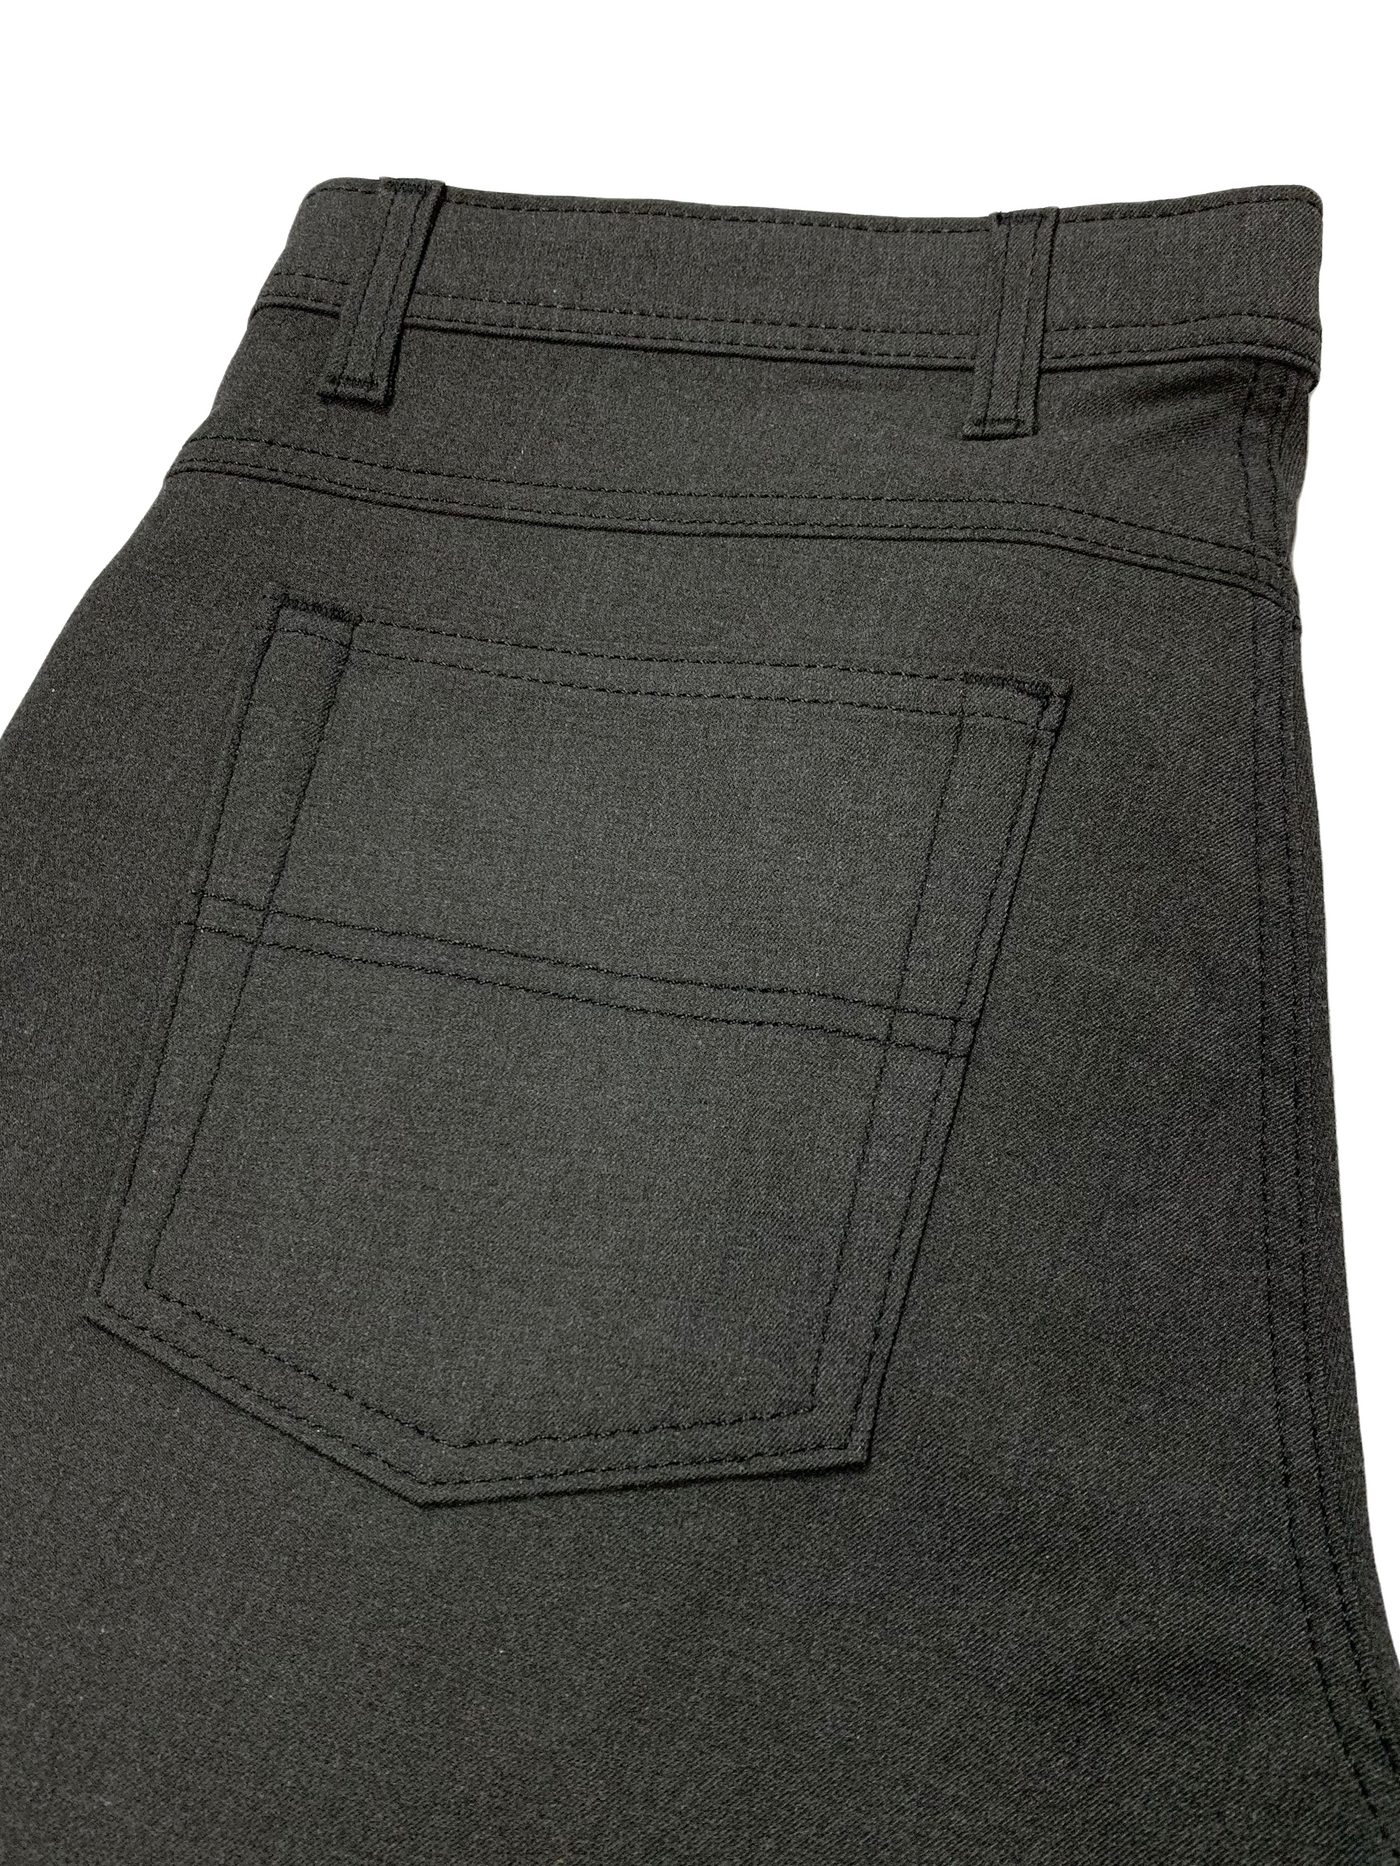 Pantalon charbon extensible Maxi